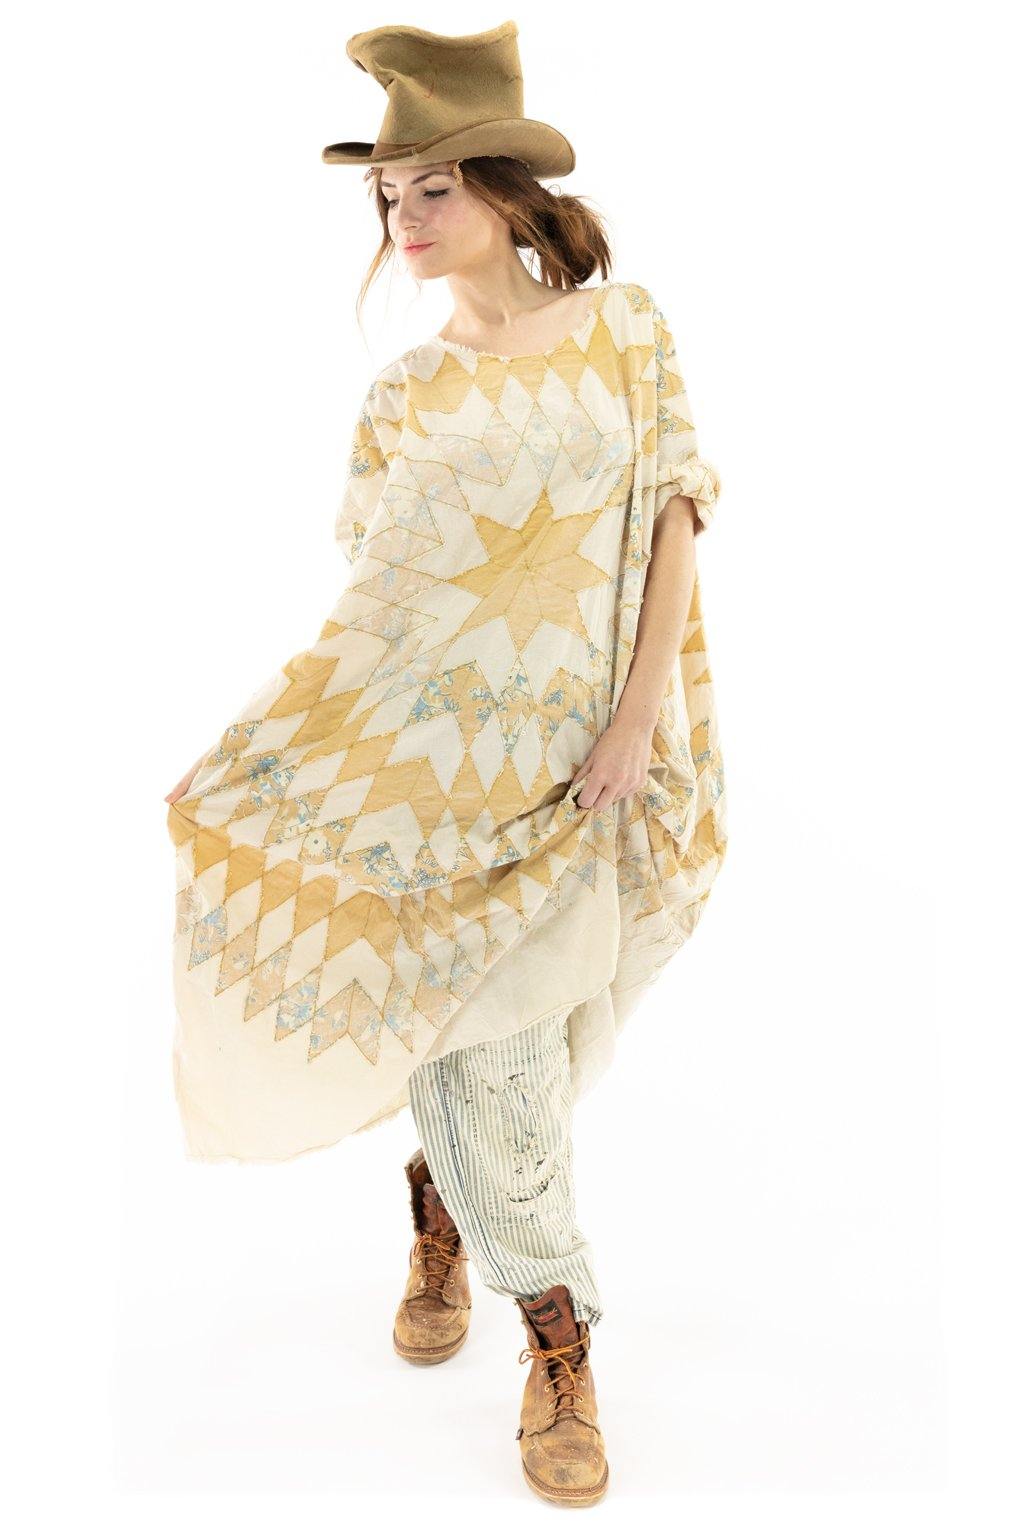 Quiltwork Artist Smock Dress - Magnolia Pearl Clothing